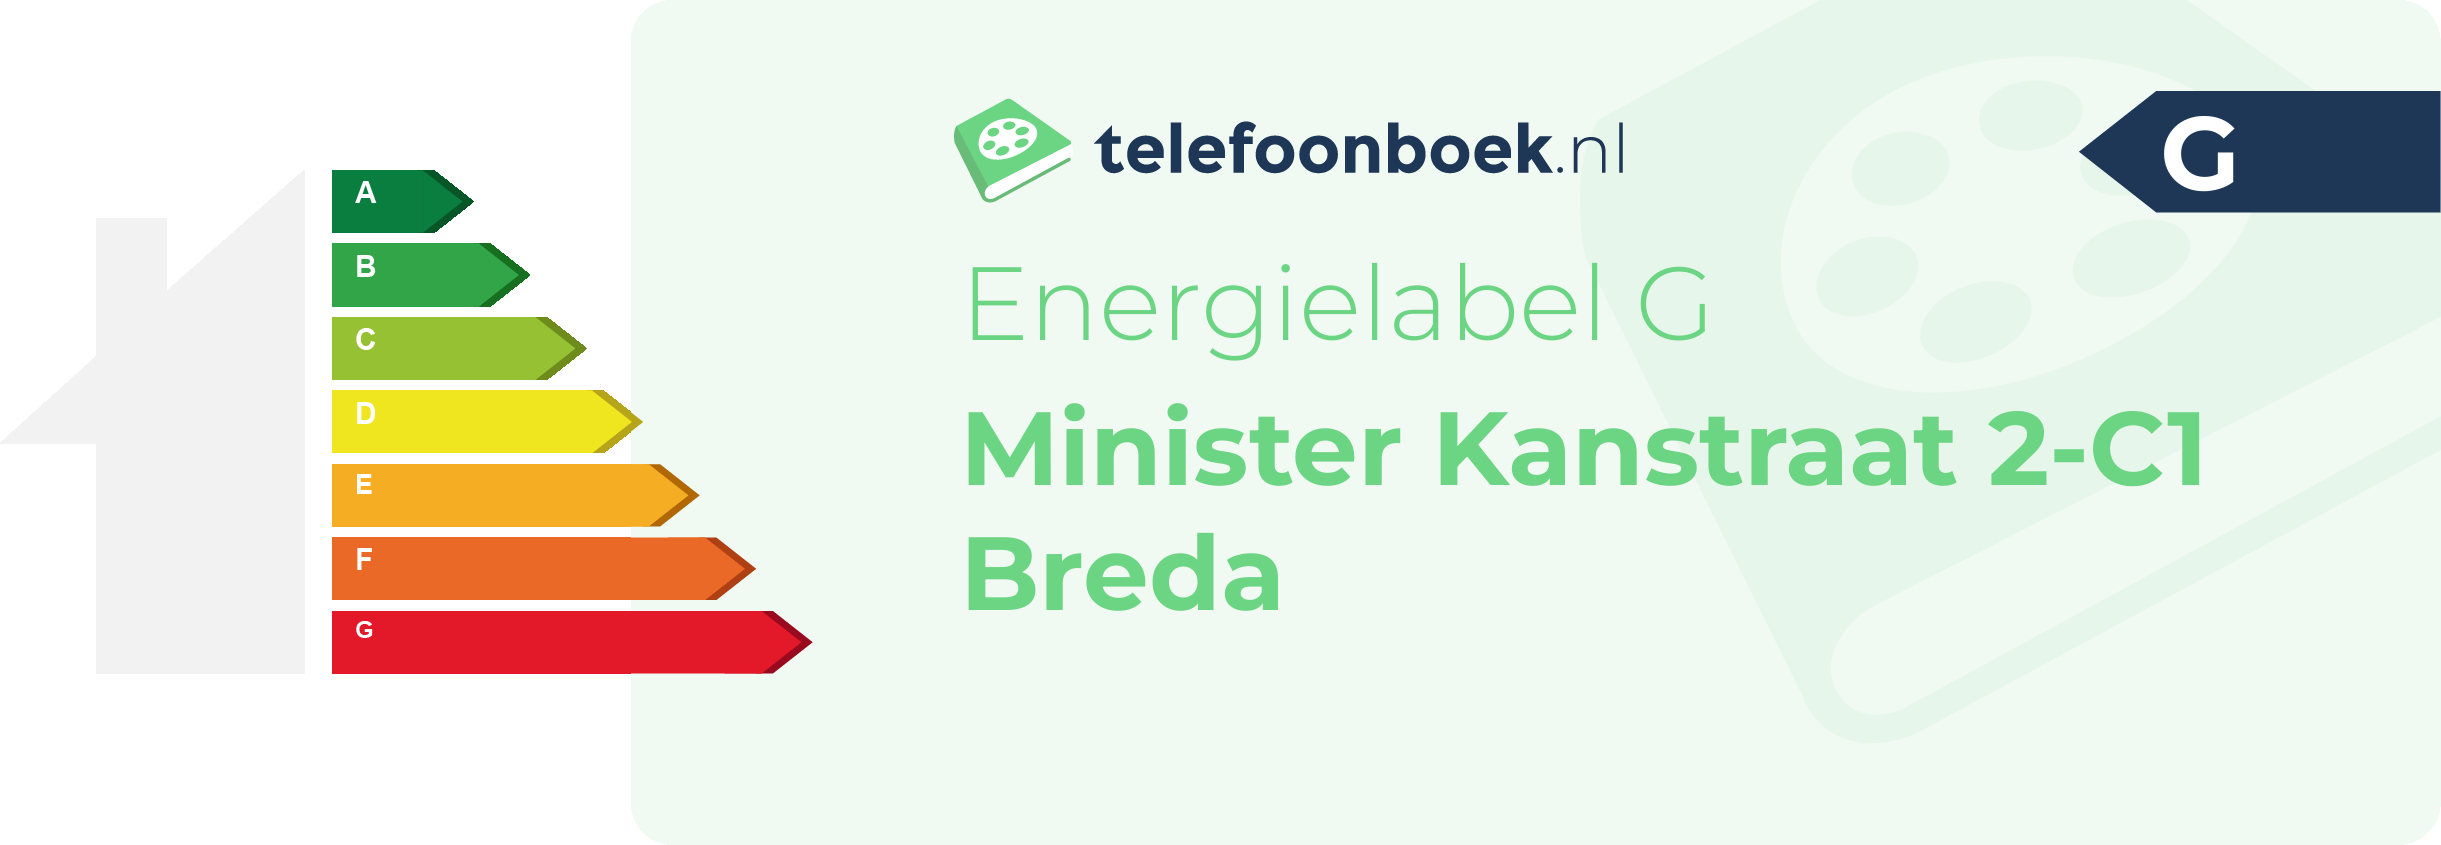 Energielabel Minister Kanstraat 2-C1 Breda